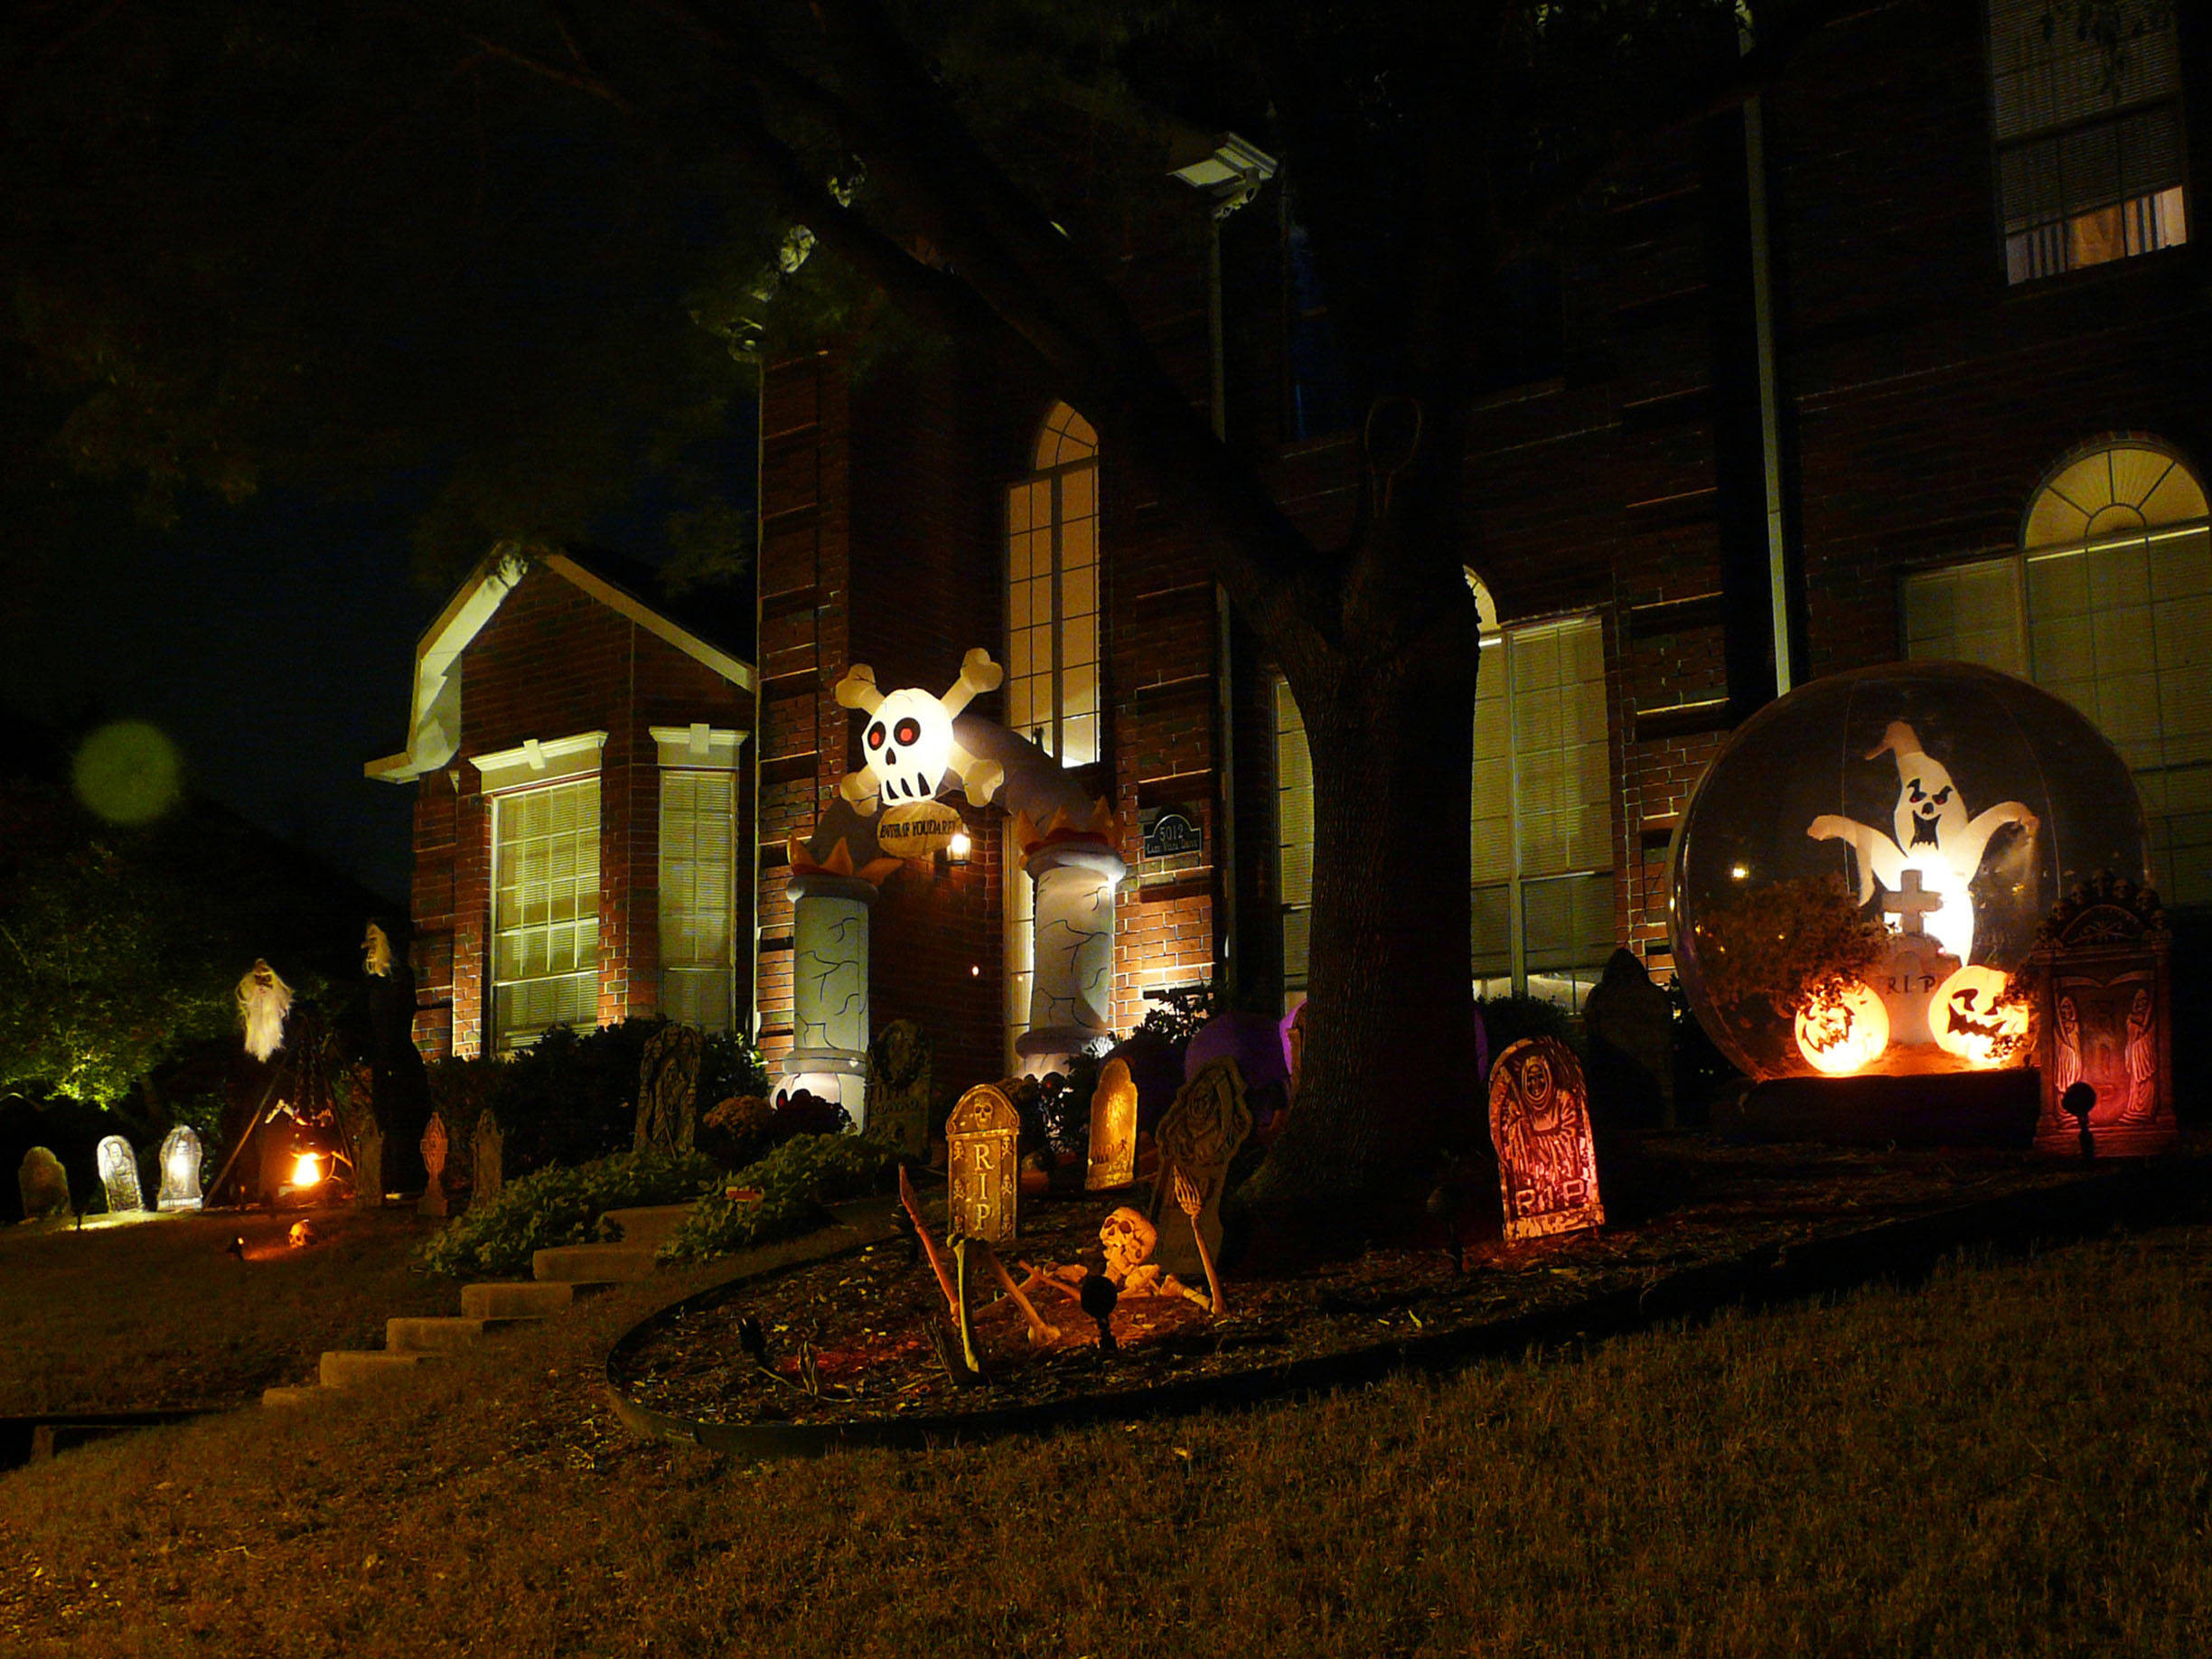 Outdoor Halloween Lights
 SPOOKY OUTDOOR DECORATIONS FOR THE HALLOWEEN NIGHT